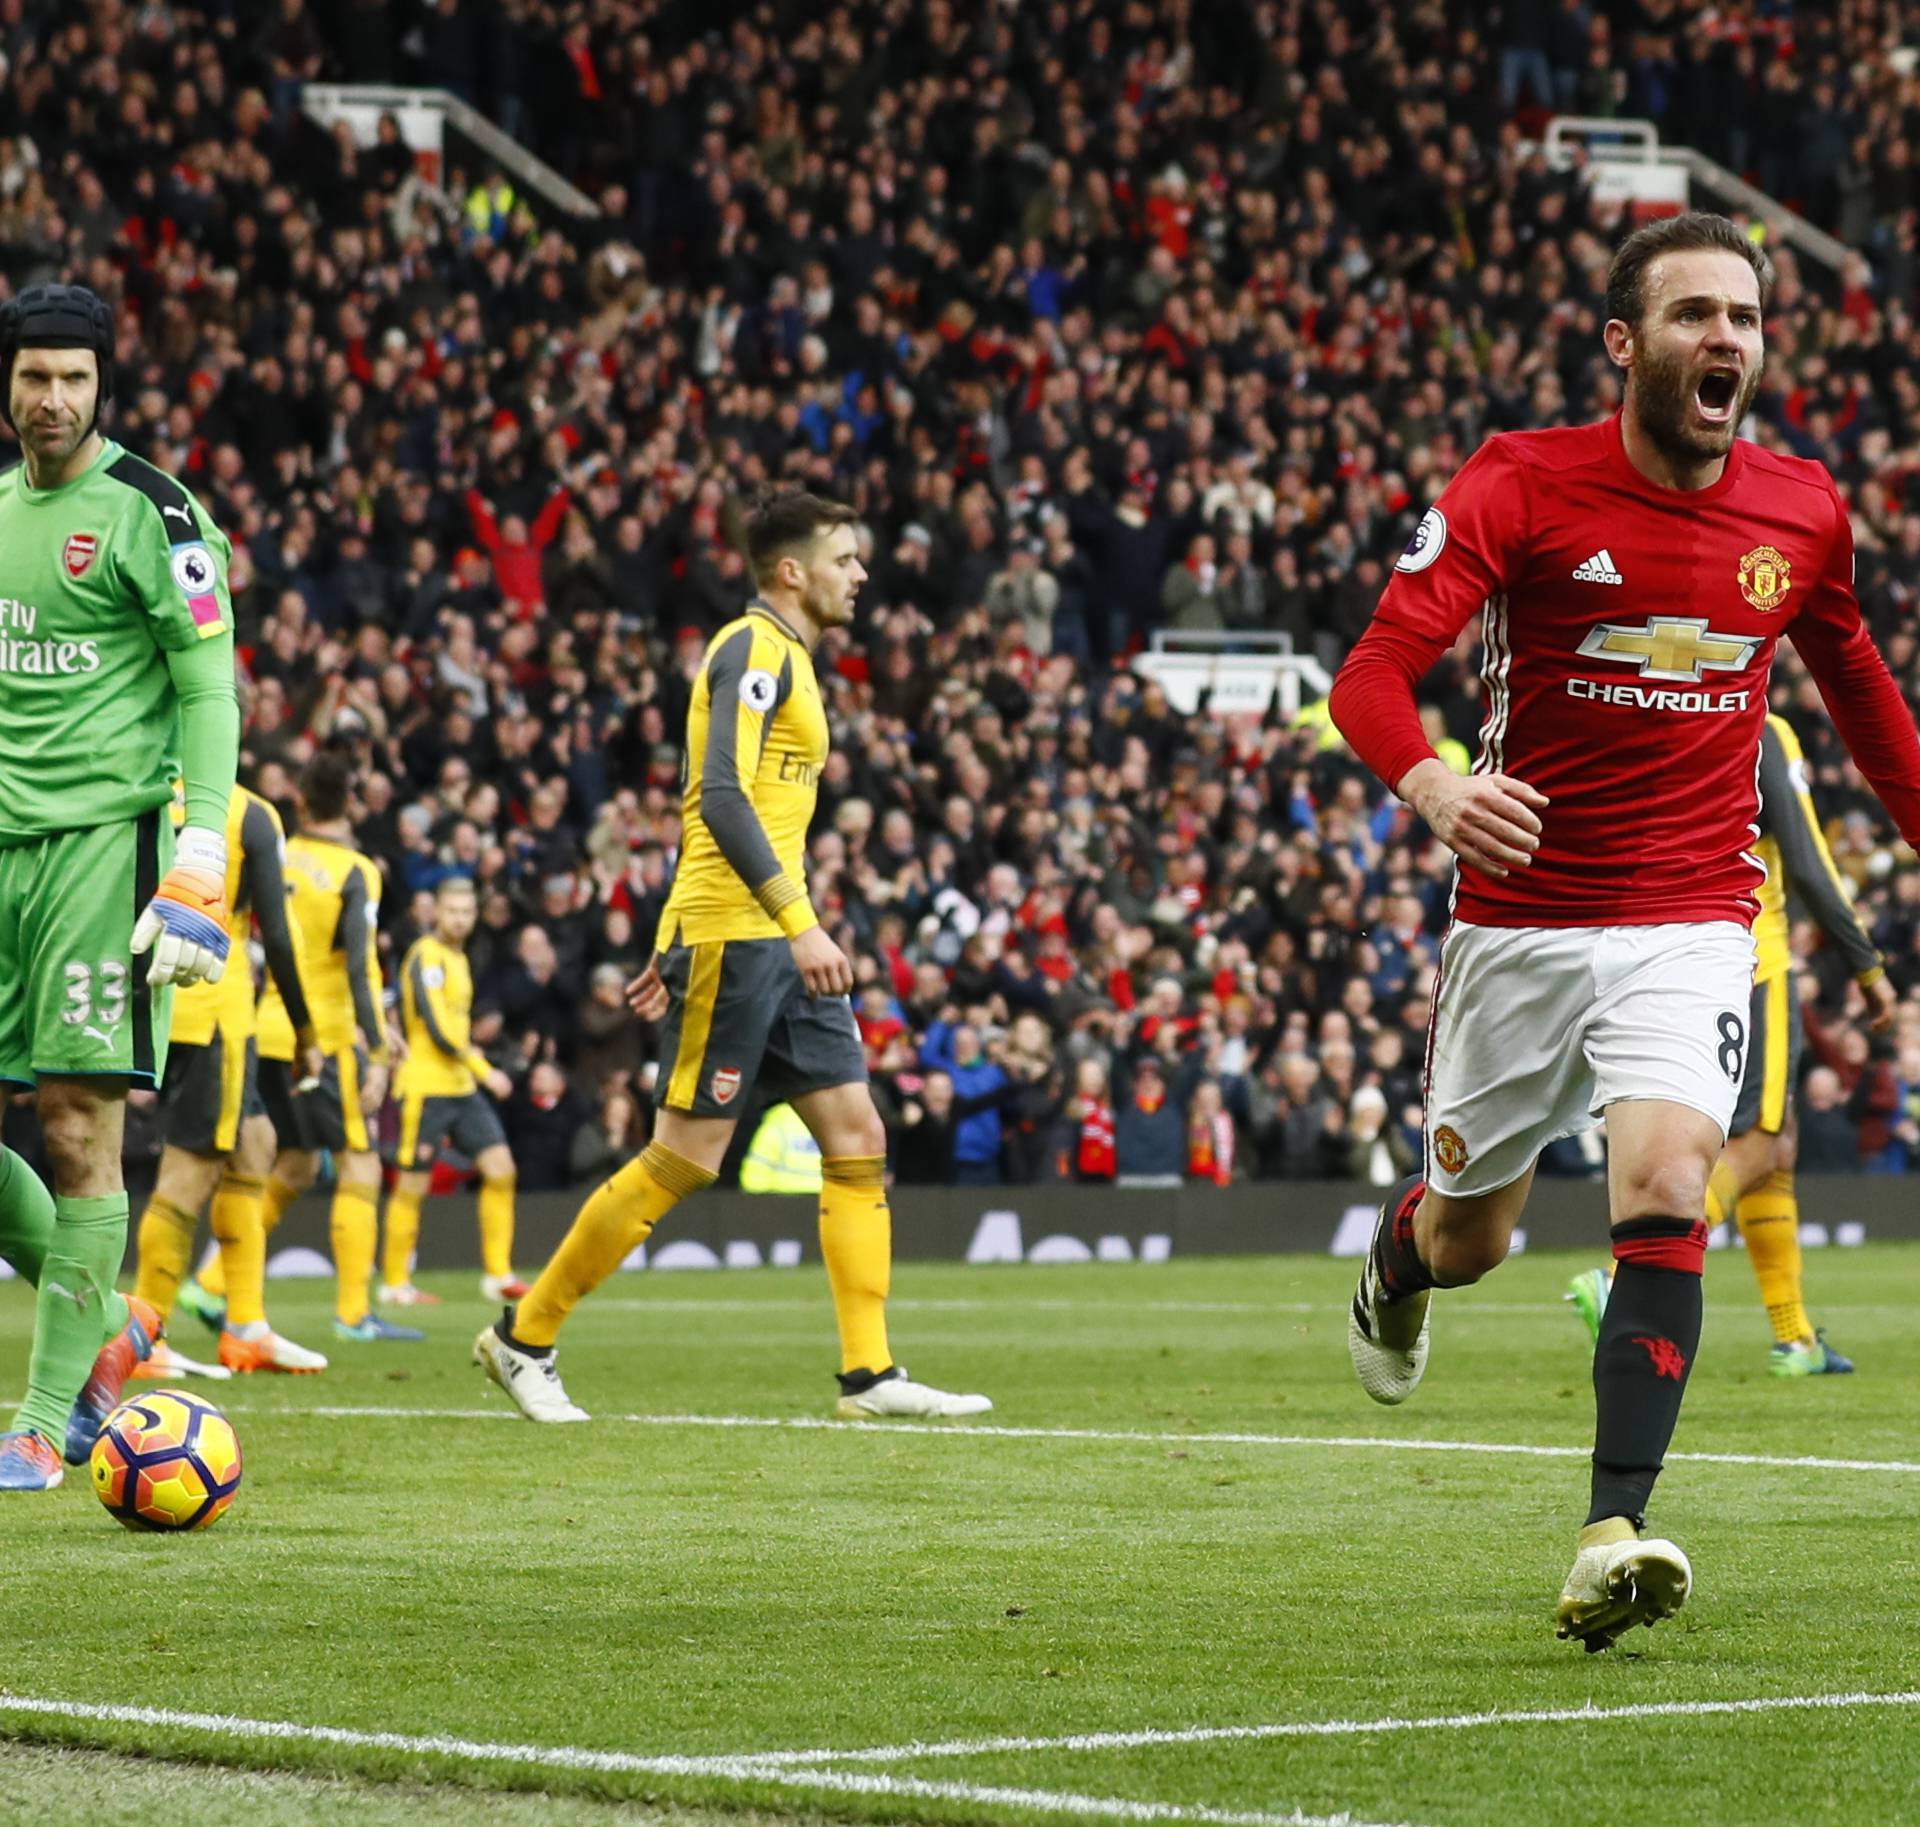 Manchester United's Juan Mata celebrates scoring their first goal